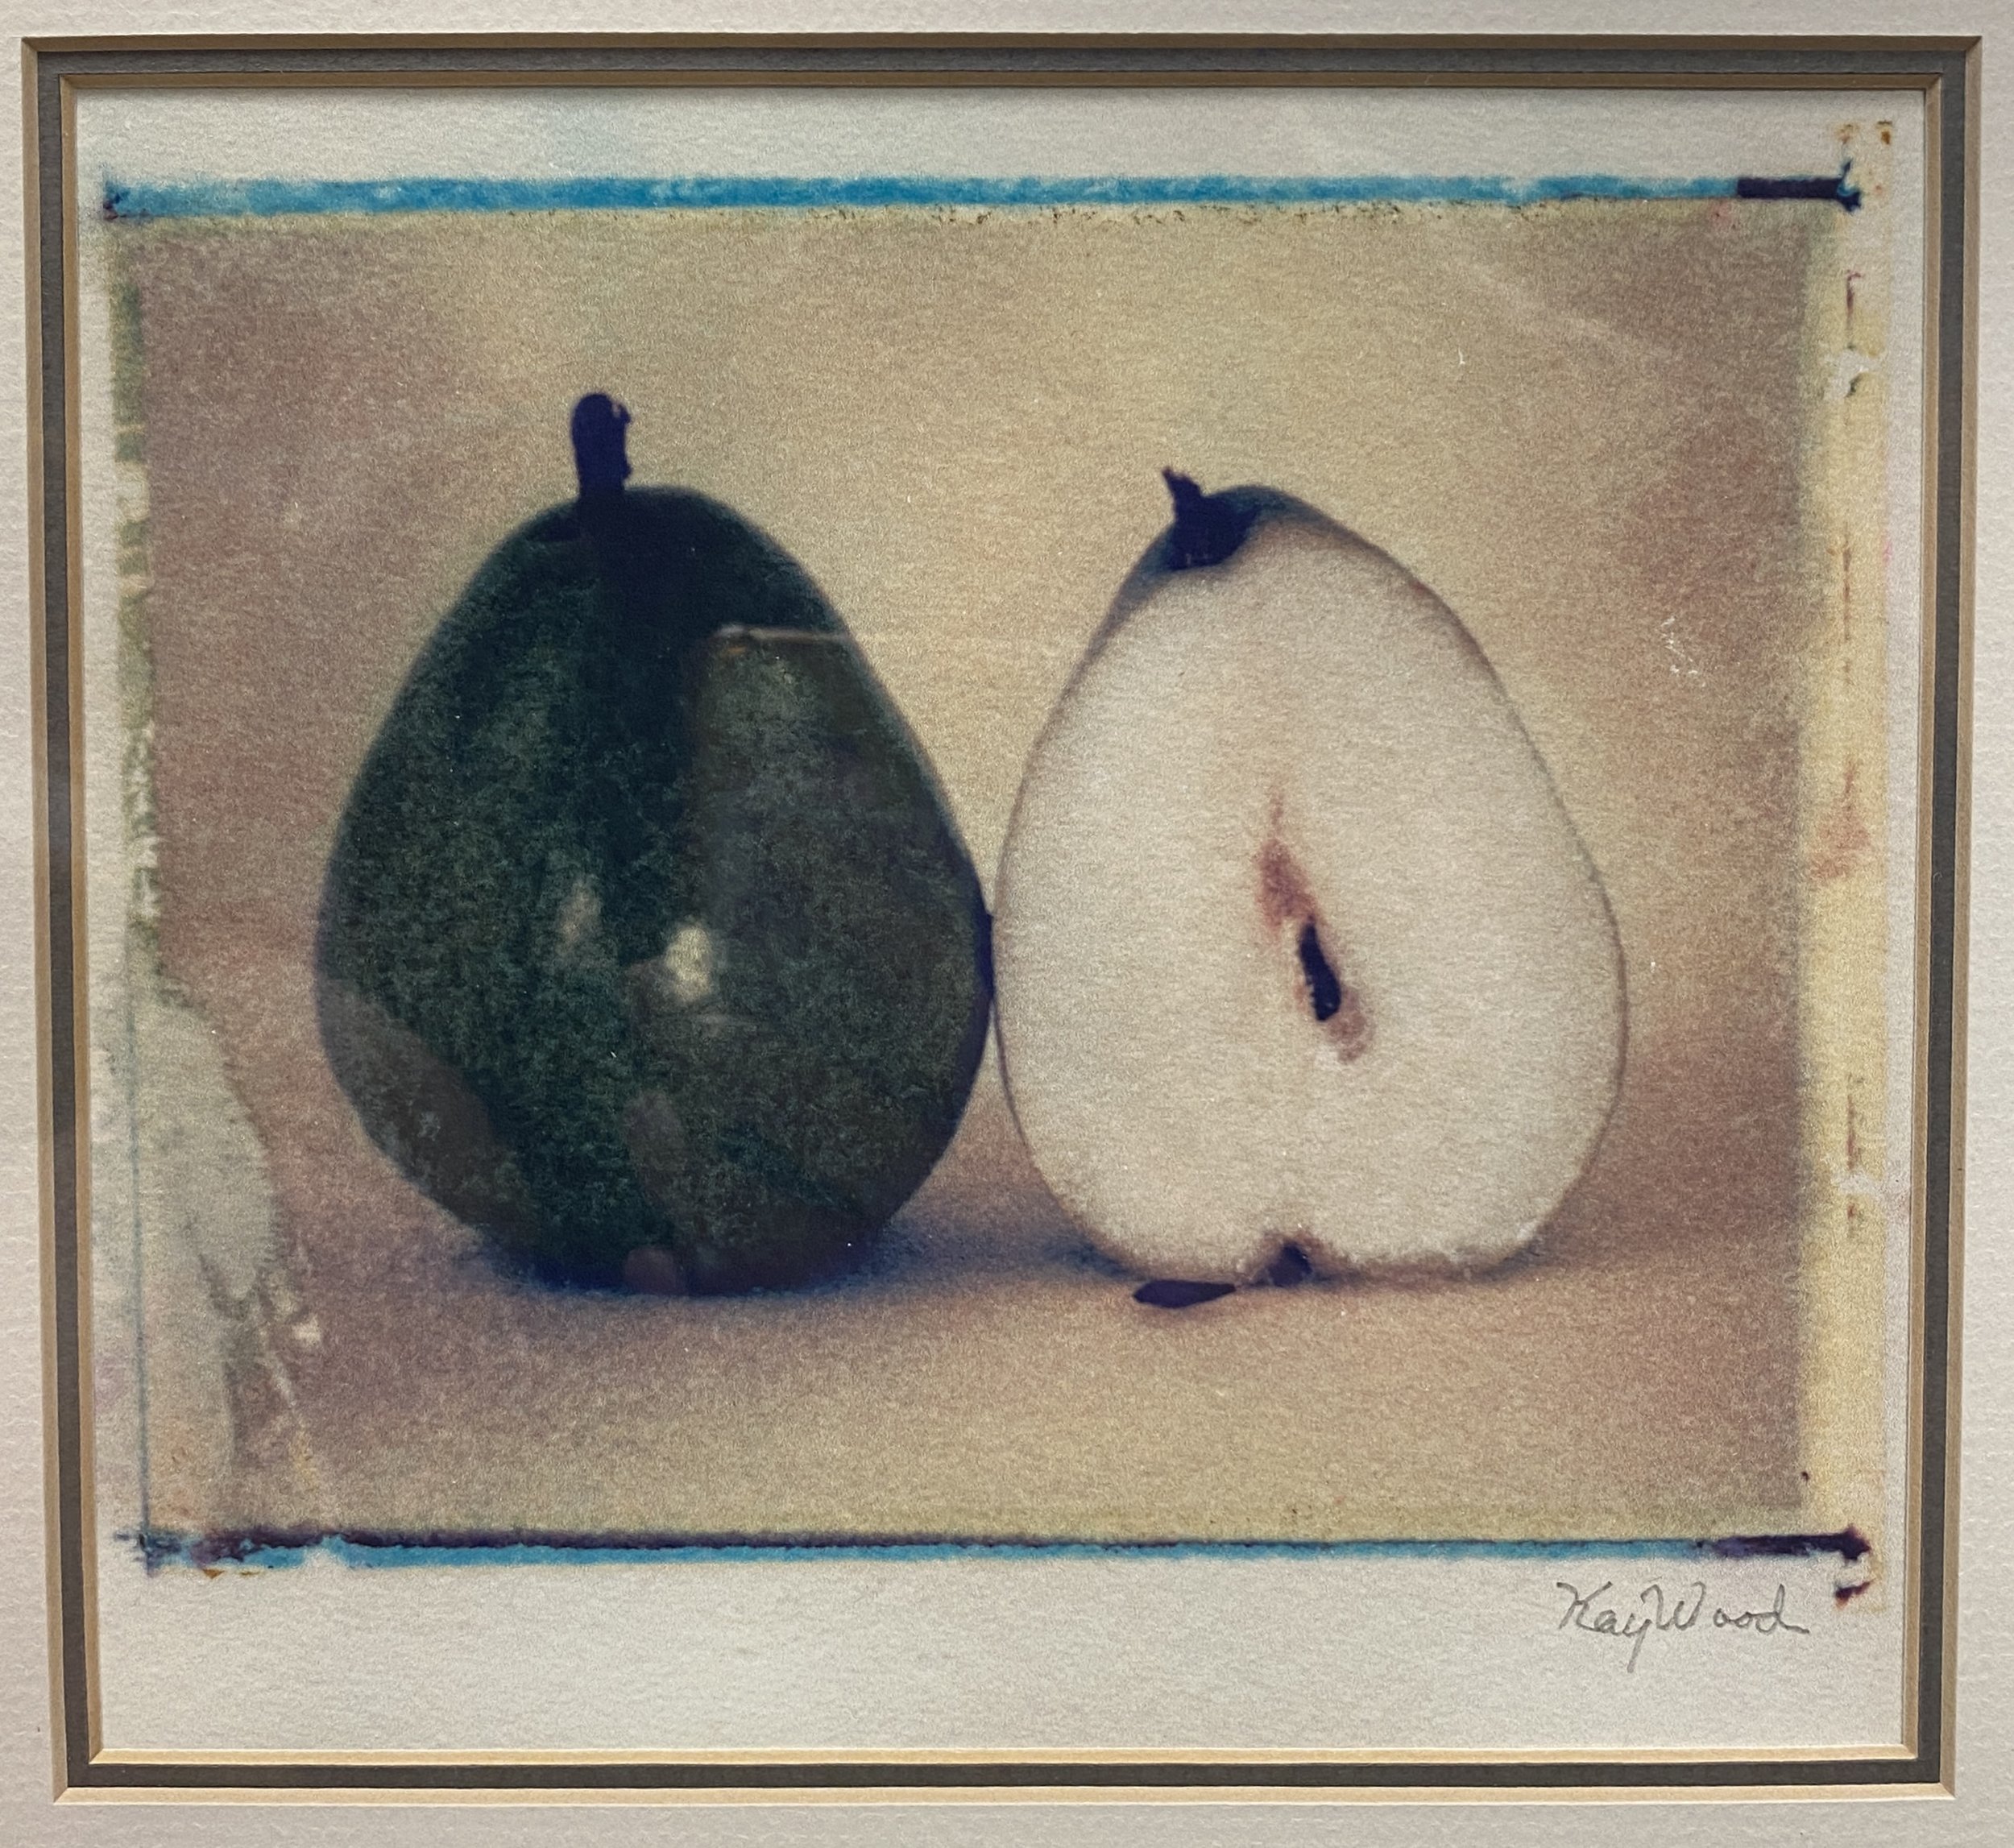 Kay Wood, The Pear